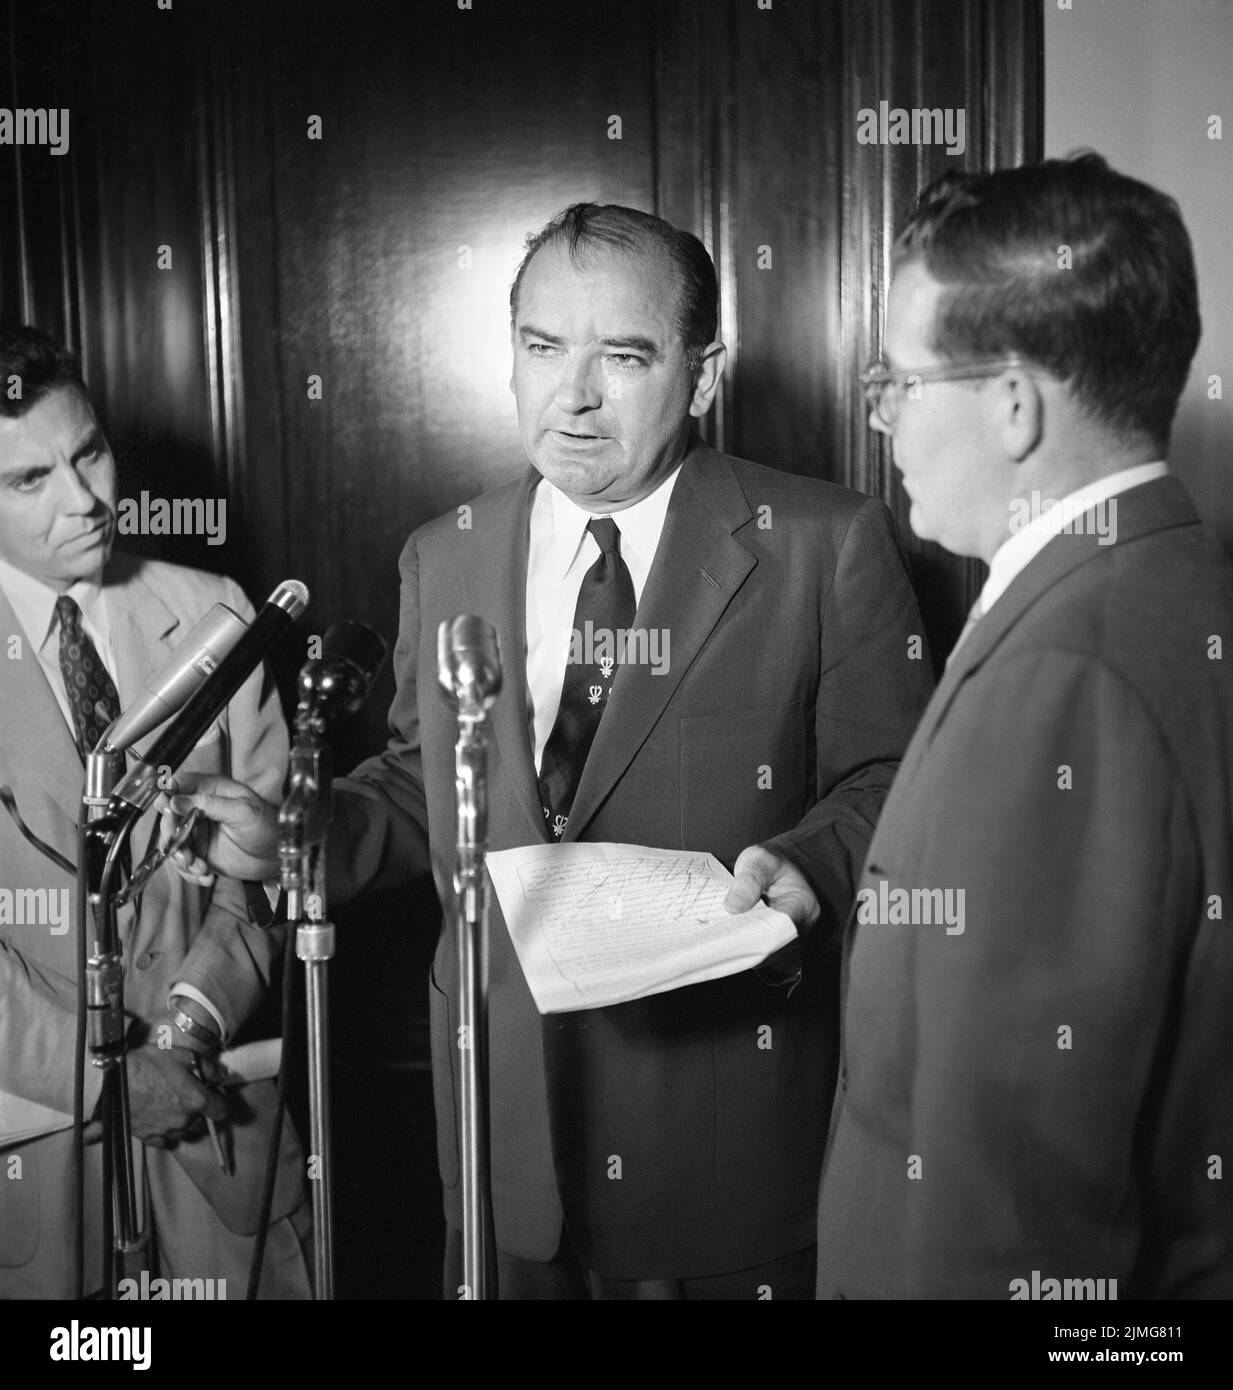 U.S. Senator from Wisconsin Joseph McCarthy at microphone during Press Conference, Washington, D.C., USA, Thomas J. O'Halloran, U.S. News & World Report Magazine Photograph Collection, June 1954 Stock Photo